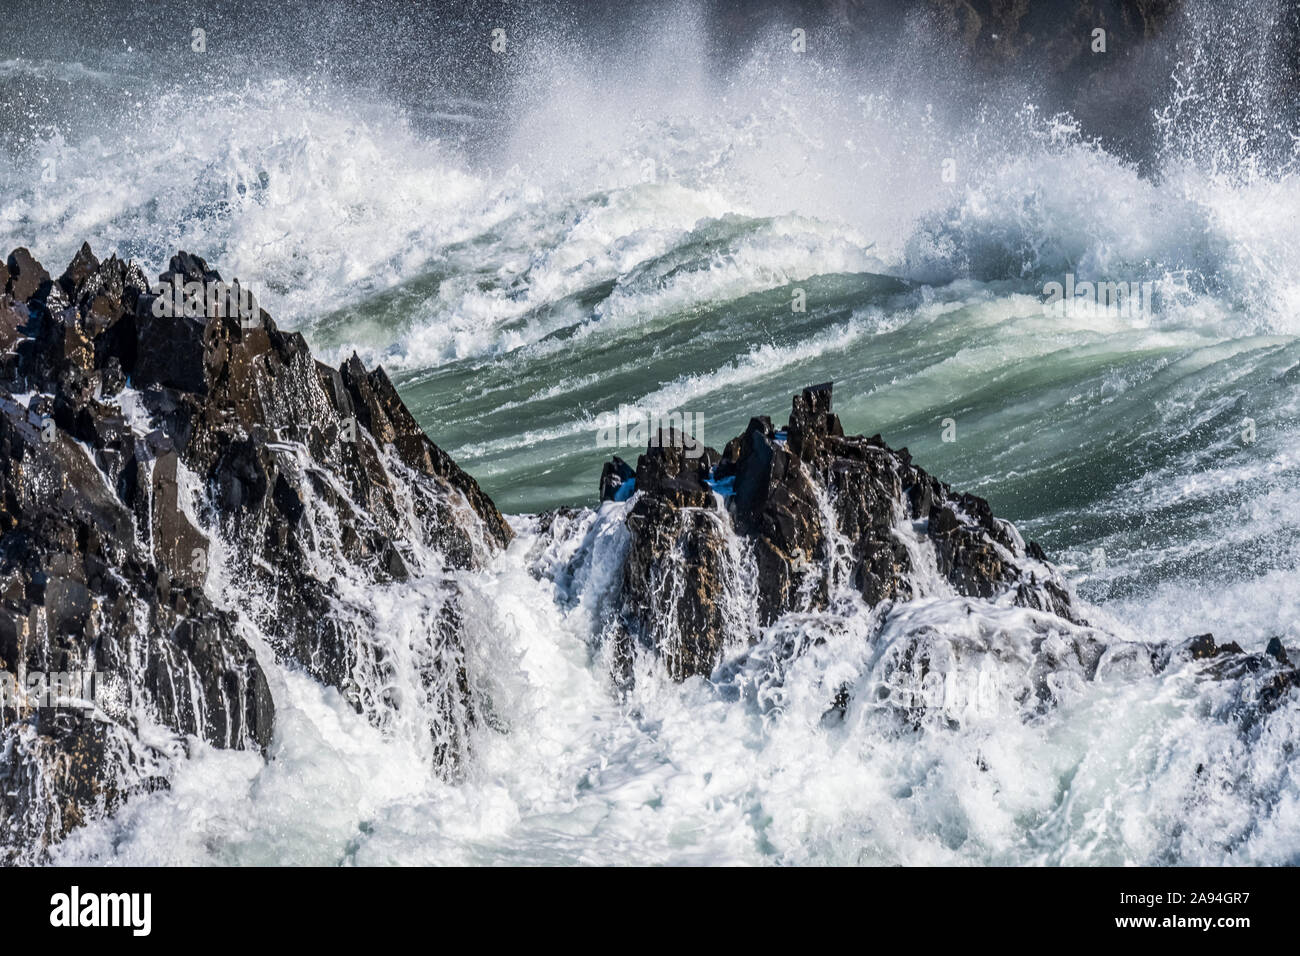 Surf breaks on a basalt outcrop at Cape Falcon; Manzanita, Oregon, United States of America Stock Photo